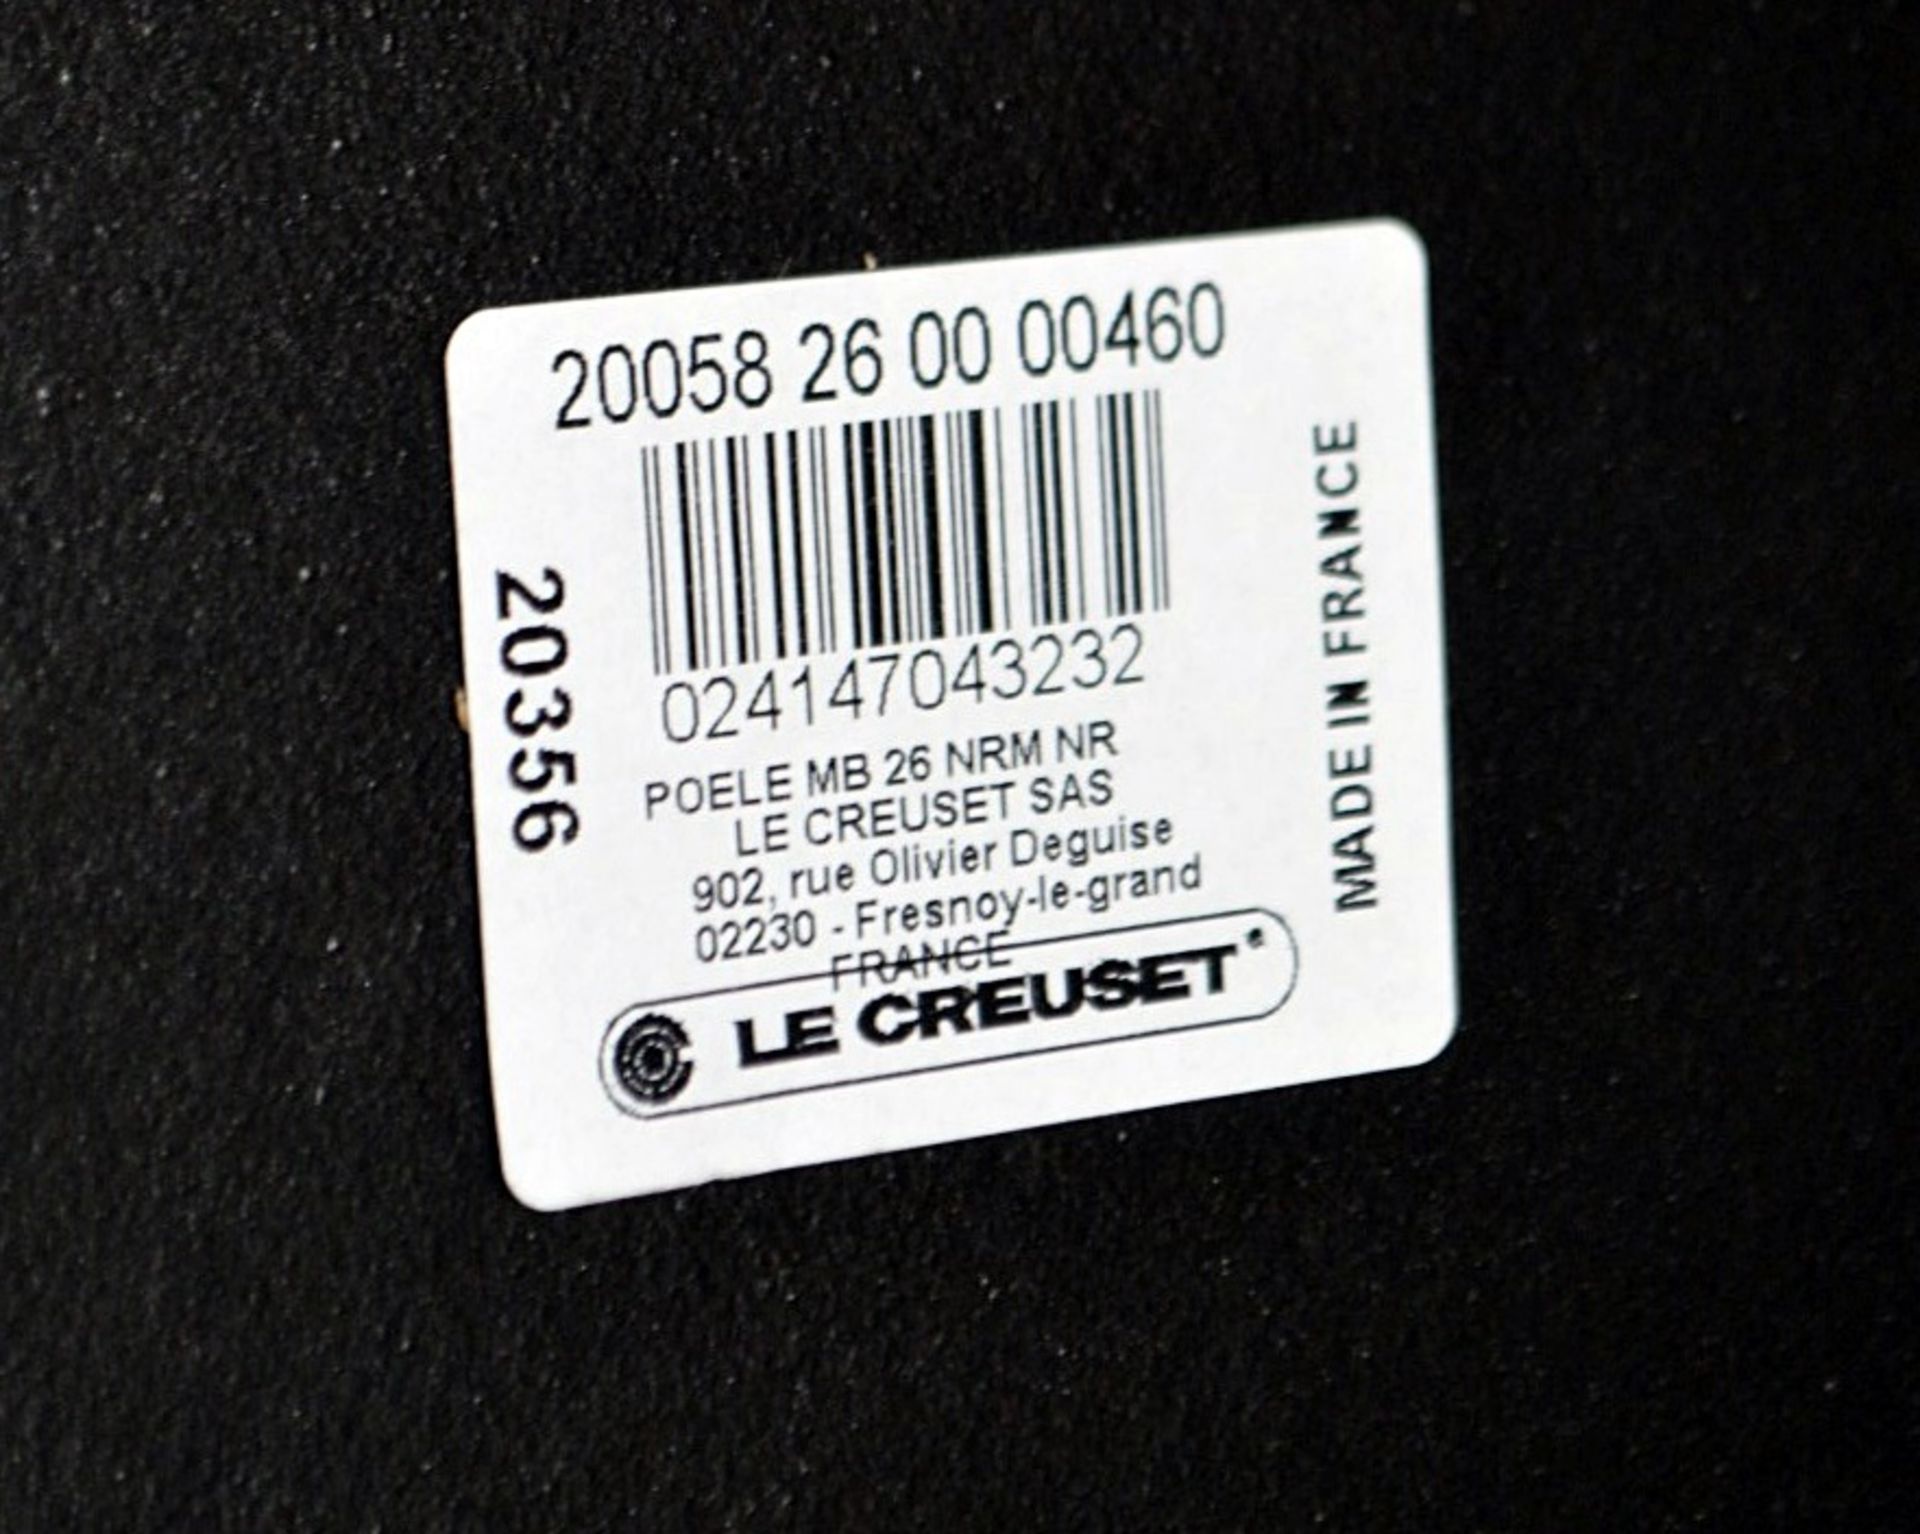 1 x Le Creuset Cast Iron 26cm Frying Pan - Ref: HHW37/JUL21 - CL679 - Location: Altrincham WA14 - Image 5 of 5